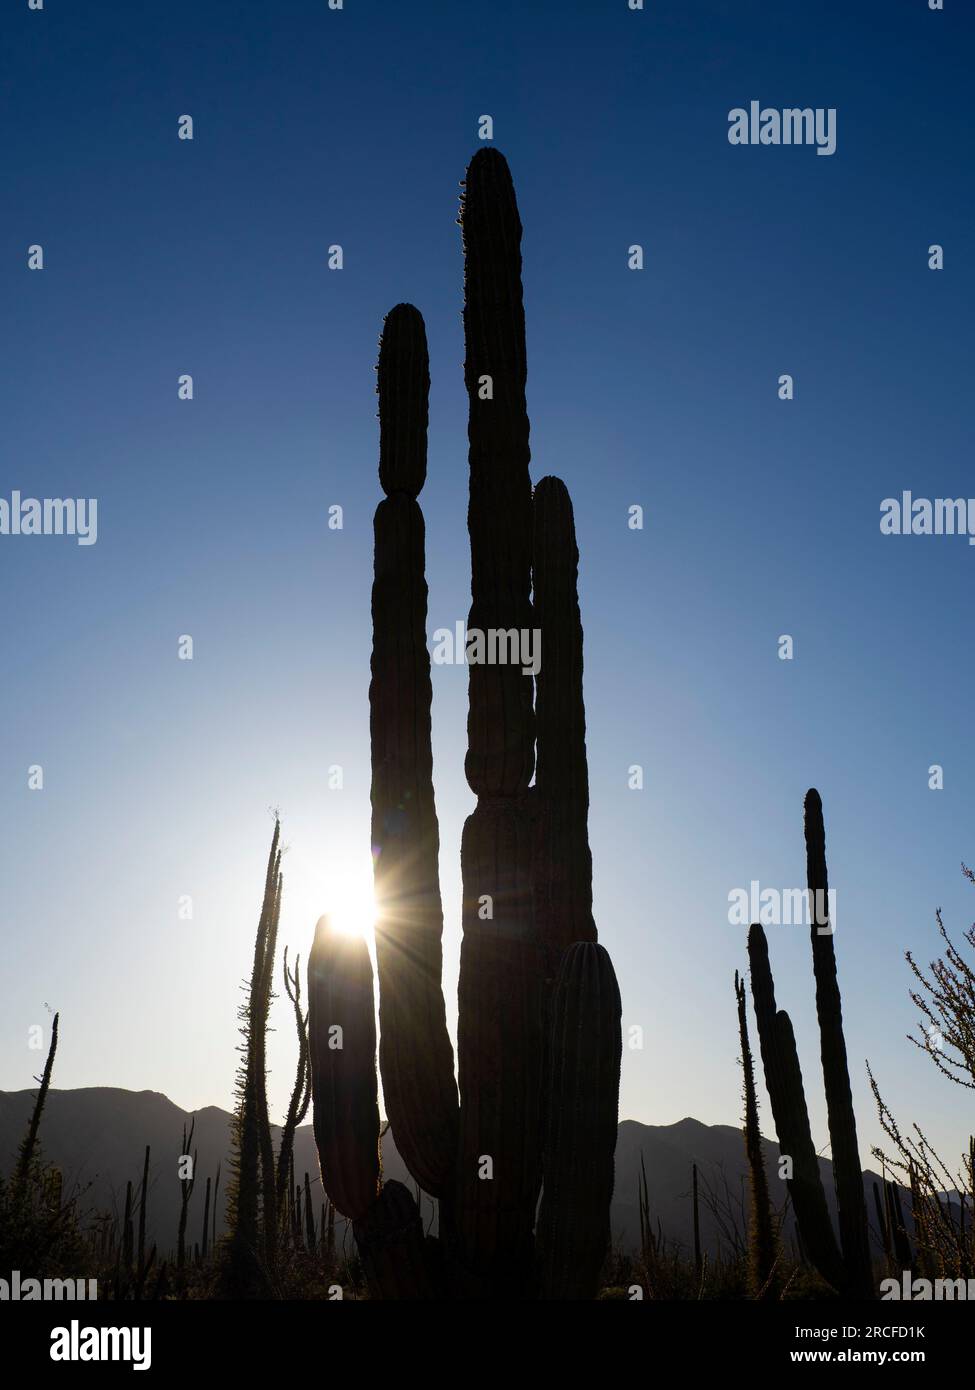 Cardon cactus, Pachycereus pringlei, with setting sun in Bahia de los Angeles, Baja California, Mexico. Stock Photo